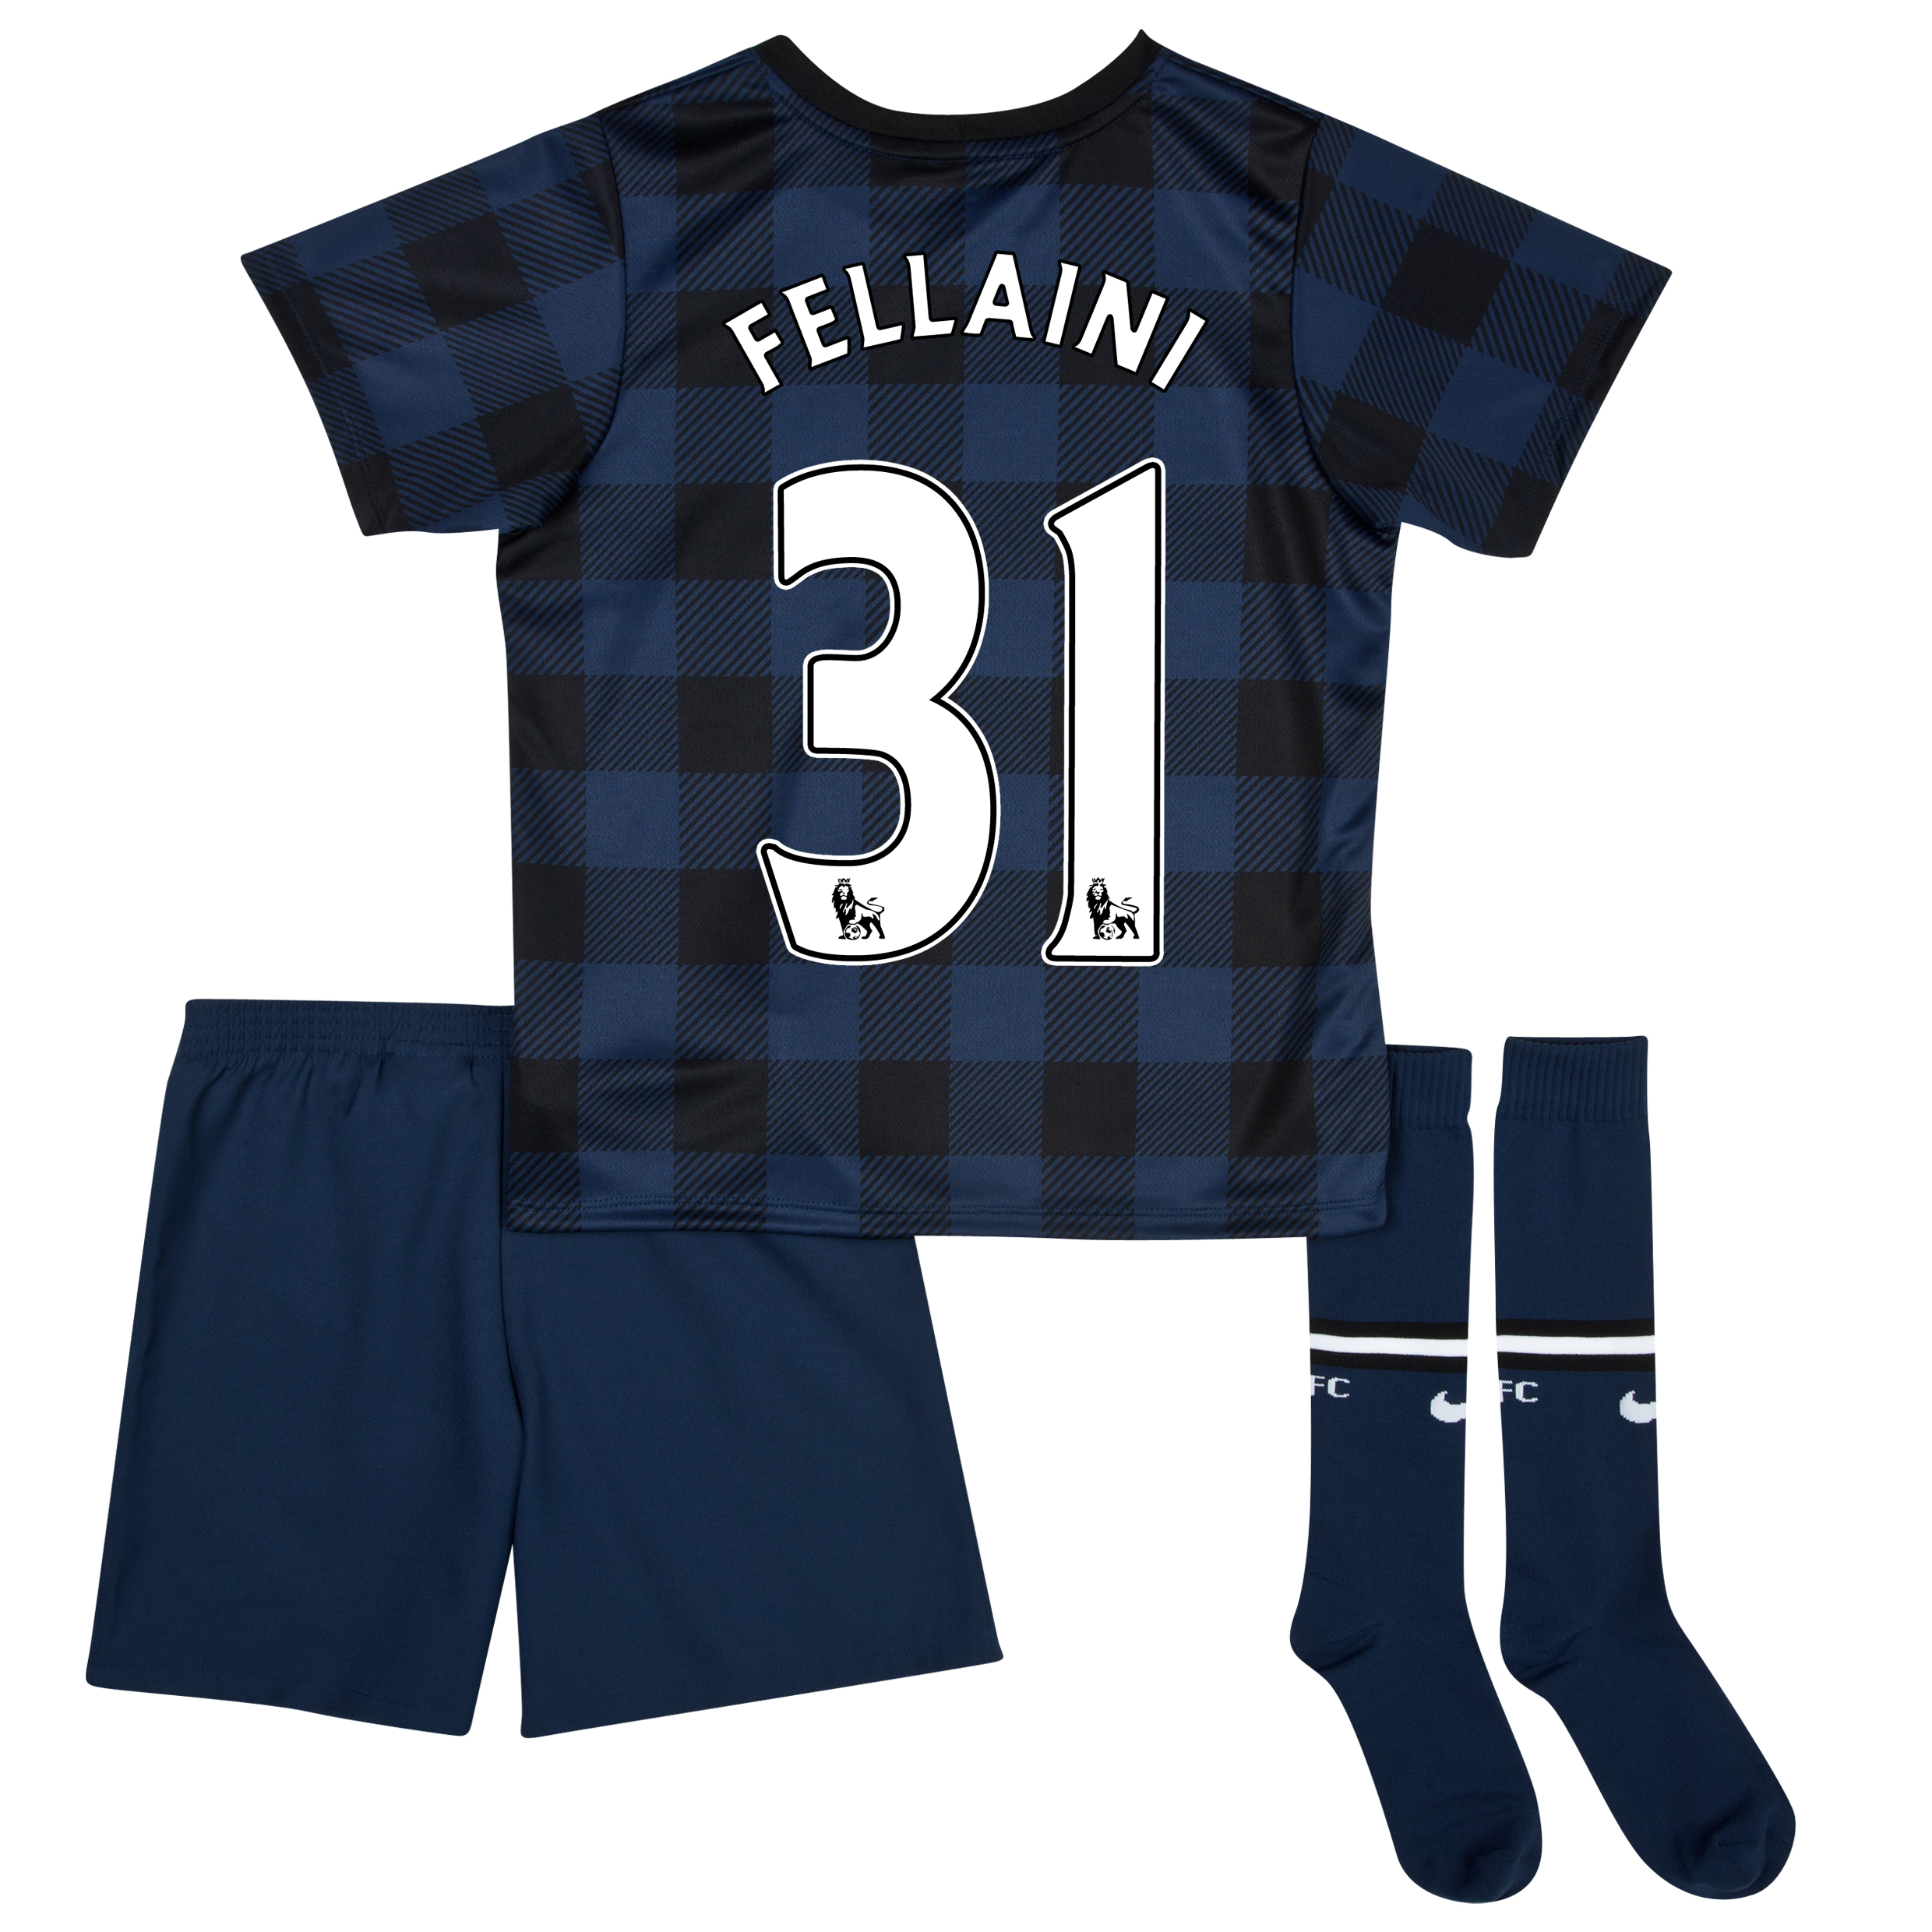 Manchester United Away Kit 2013/14 - Little Boys with Fellaini 31 printing